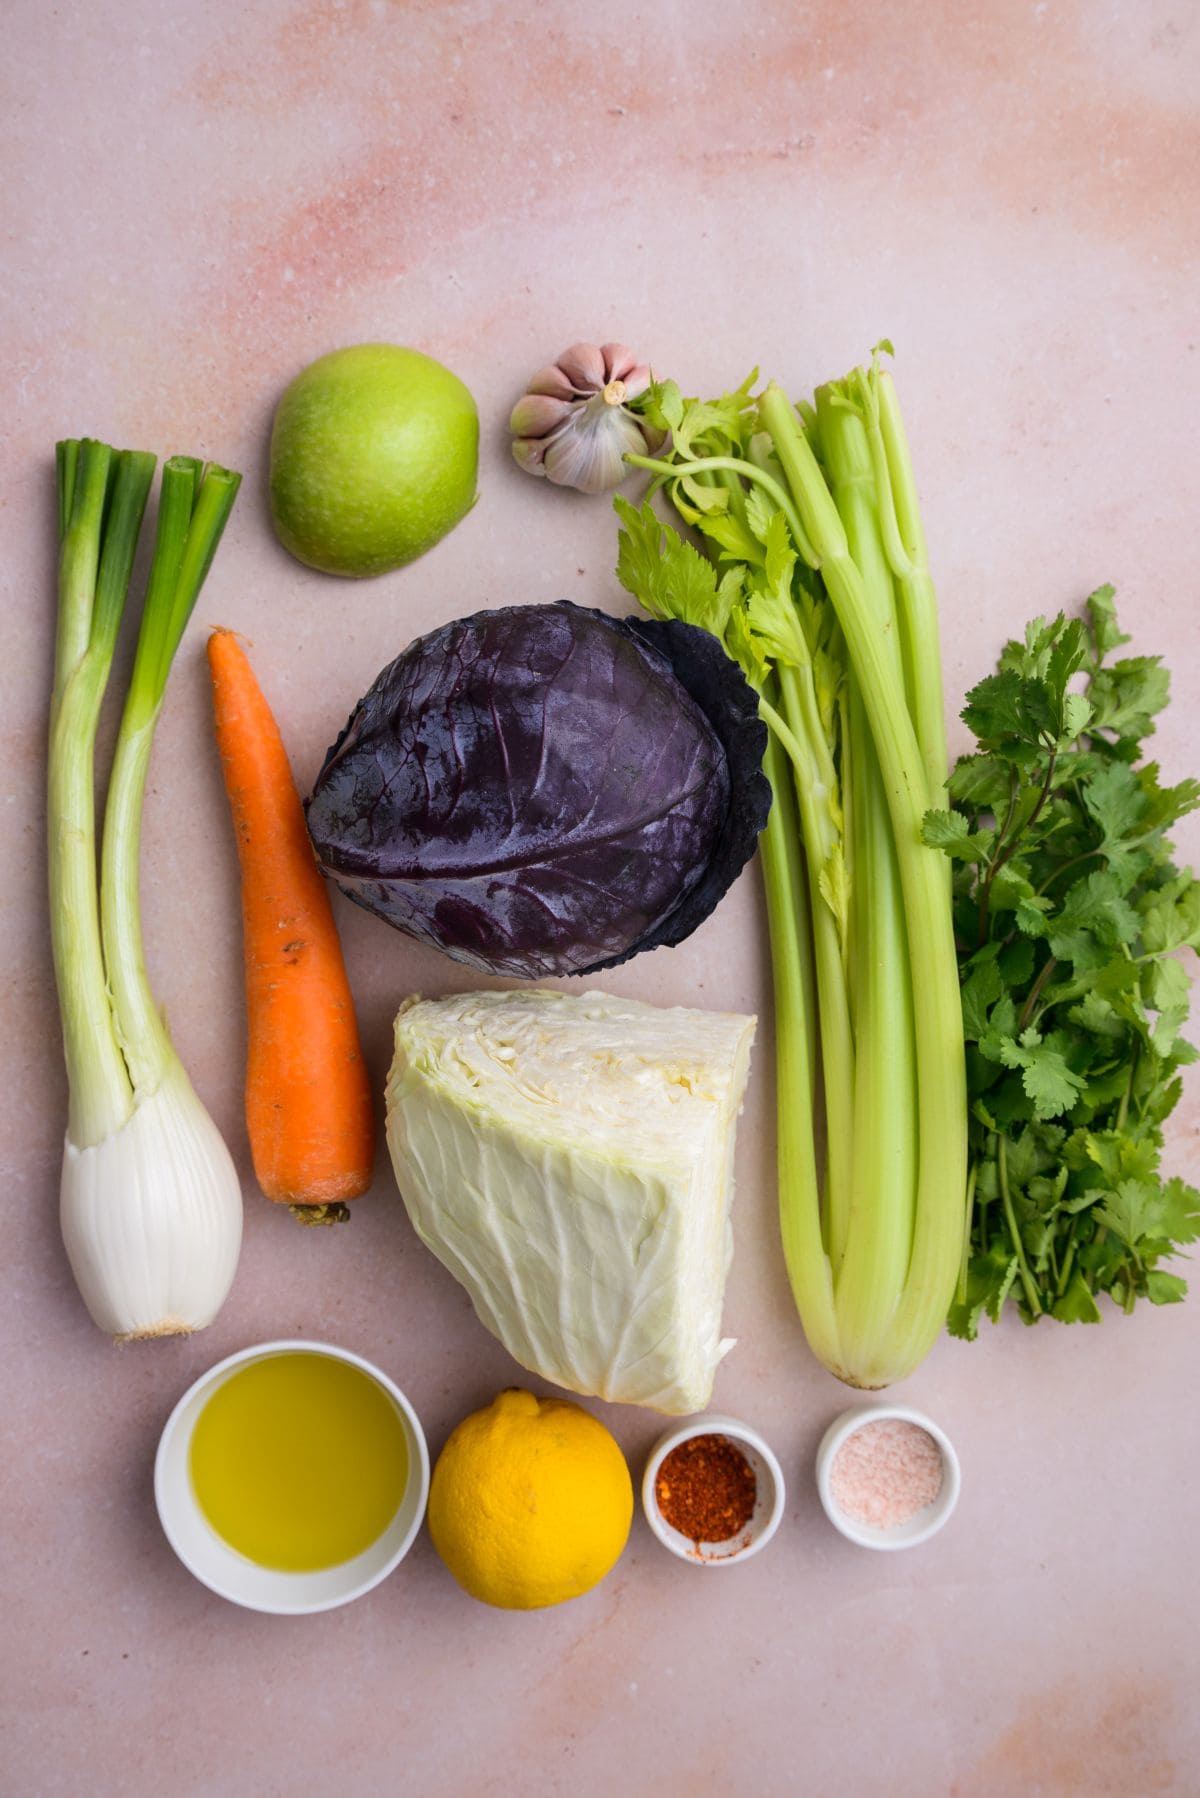 Healthy coleslaw ingredients